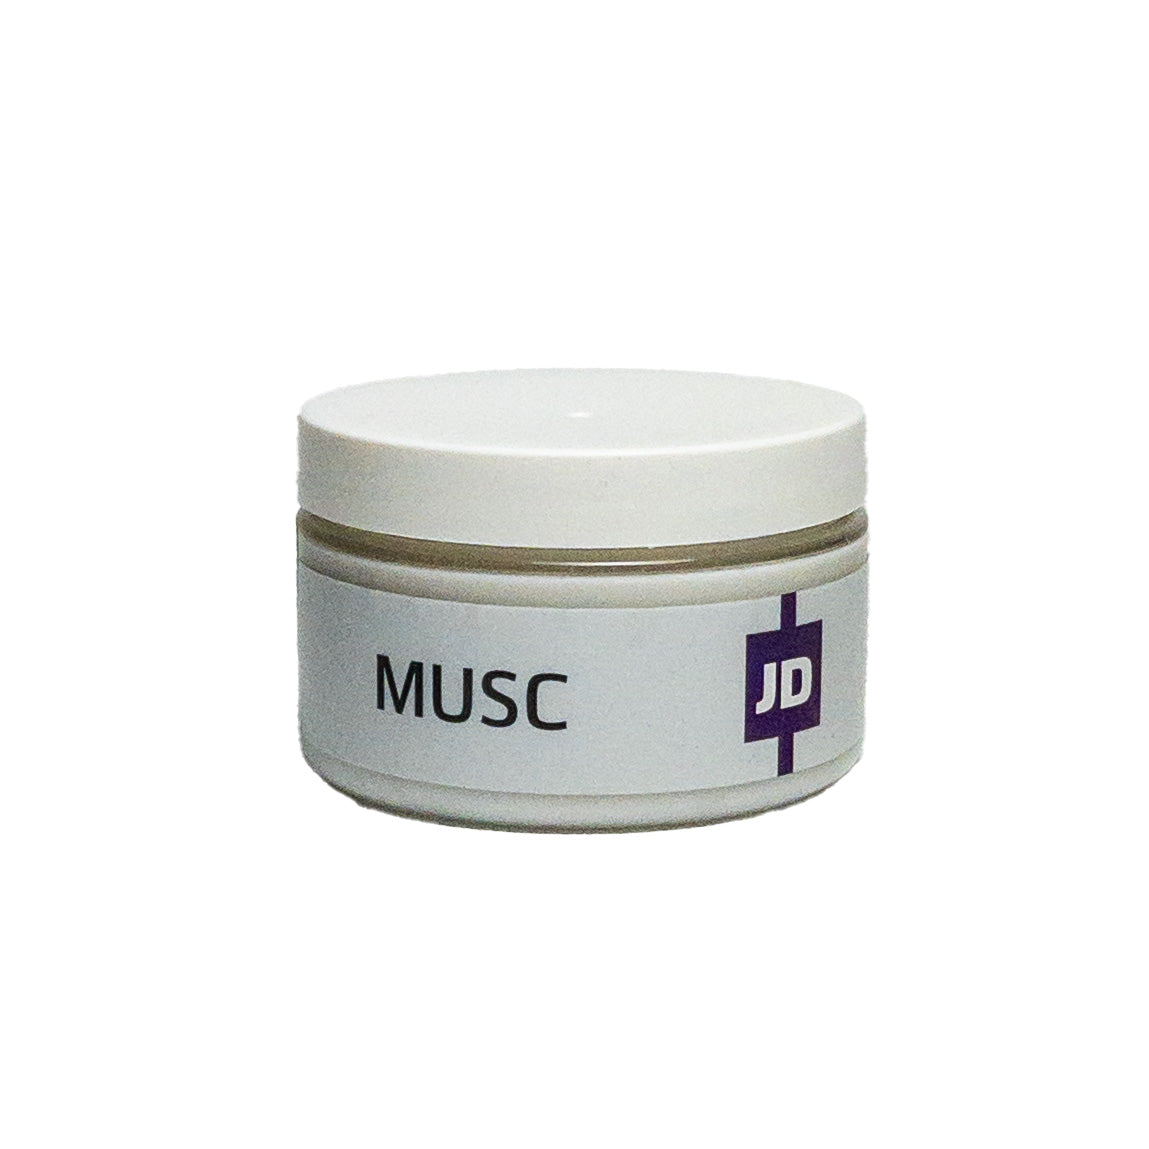 JD Musc Neutre Body Wear Cream 4 oz